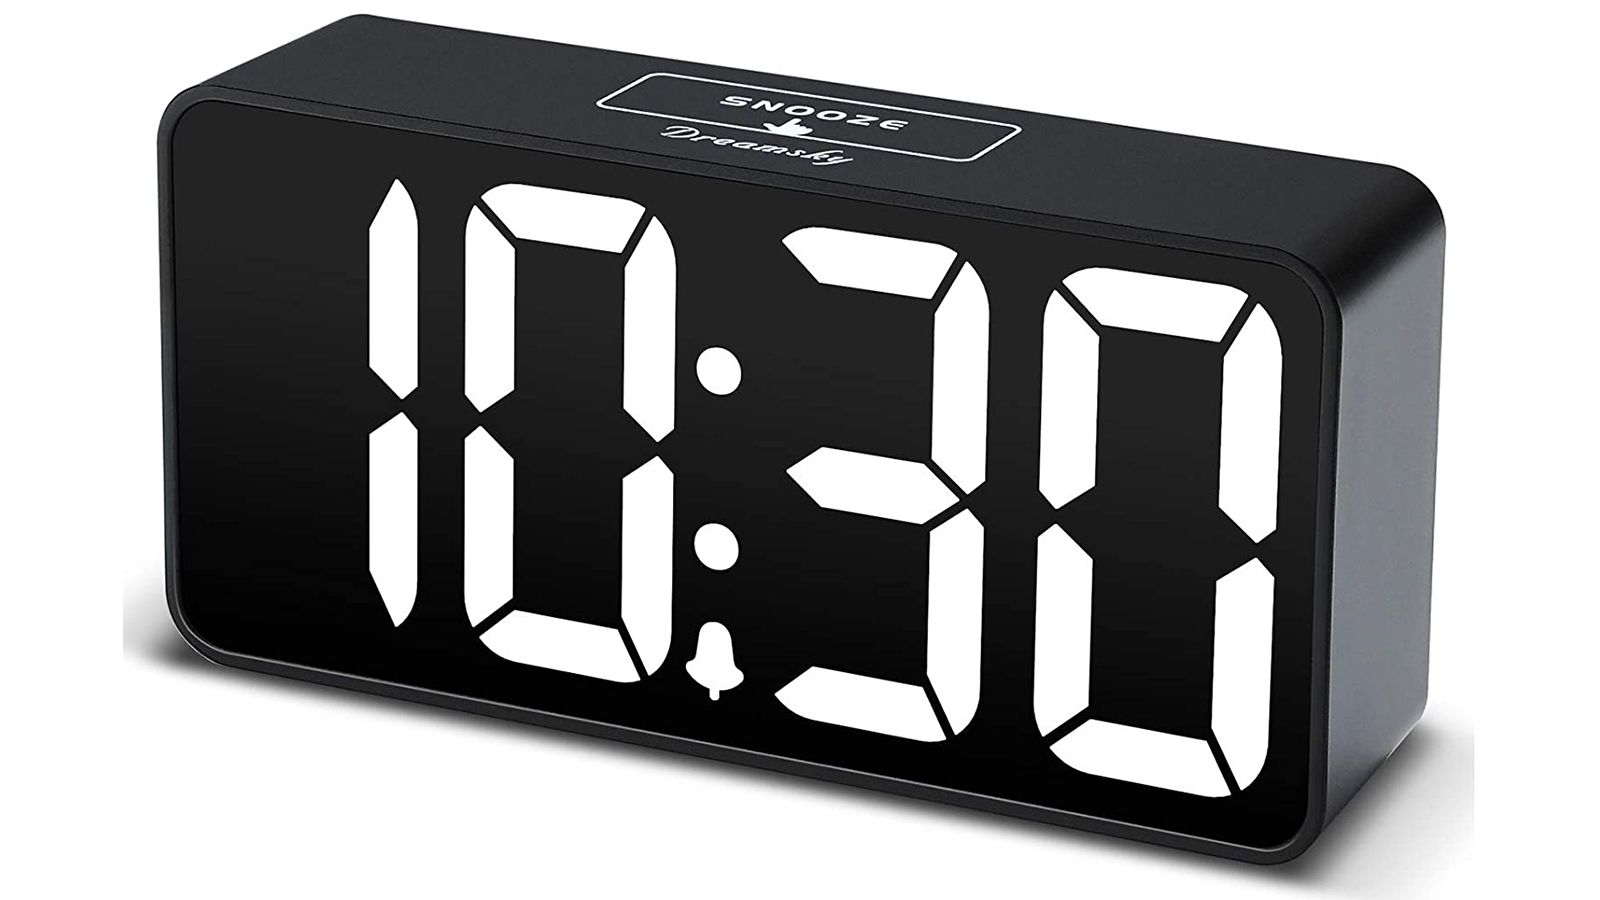 9 Best Alarm Clocks: Sunrise Alarm Clocks, Digital Alarms, and